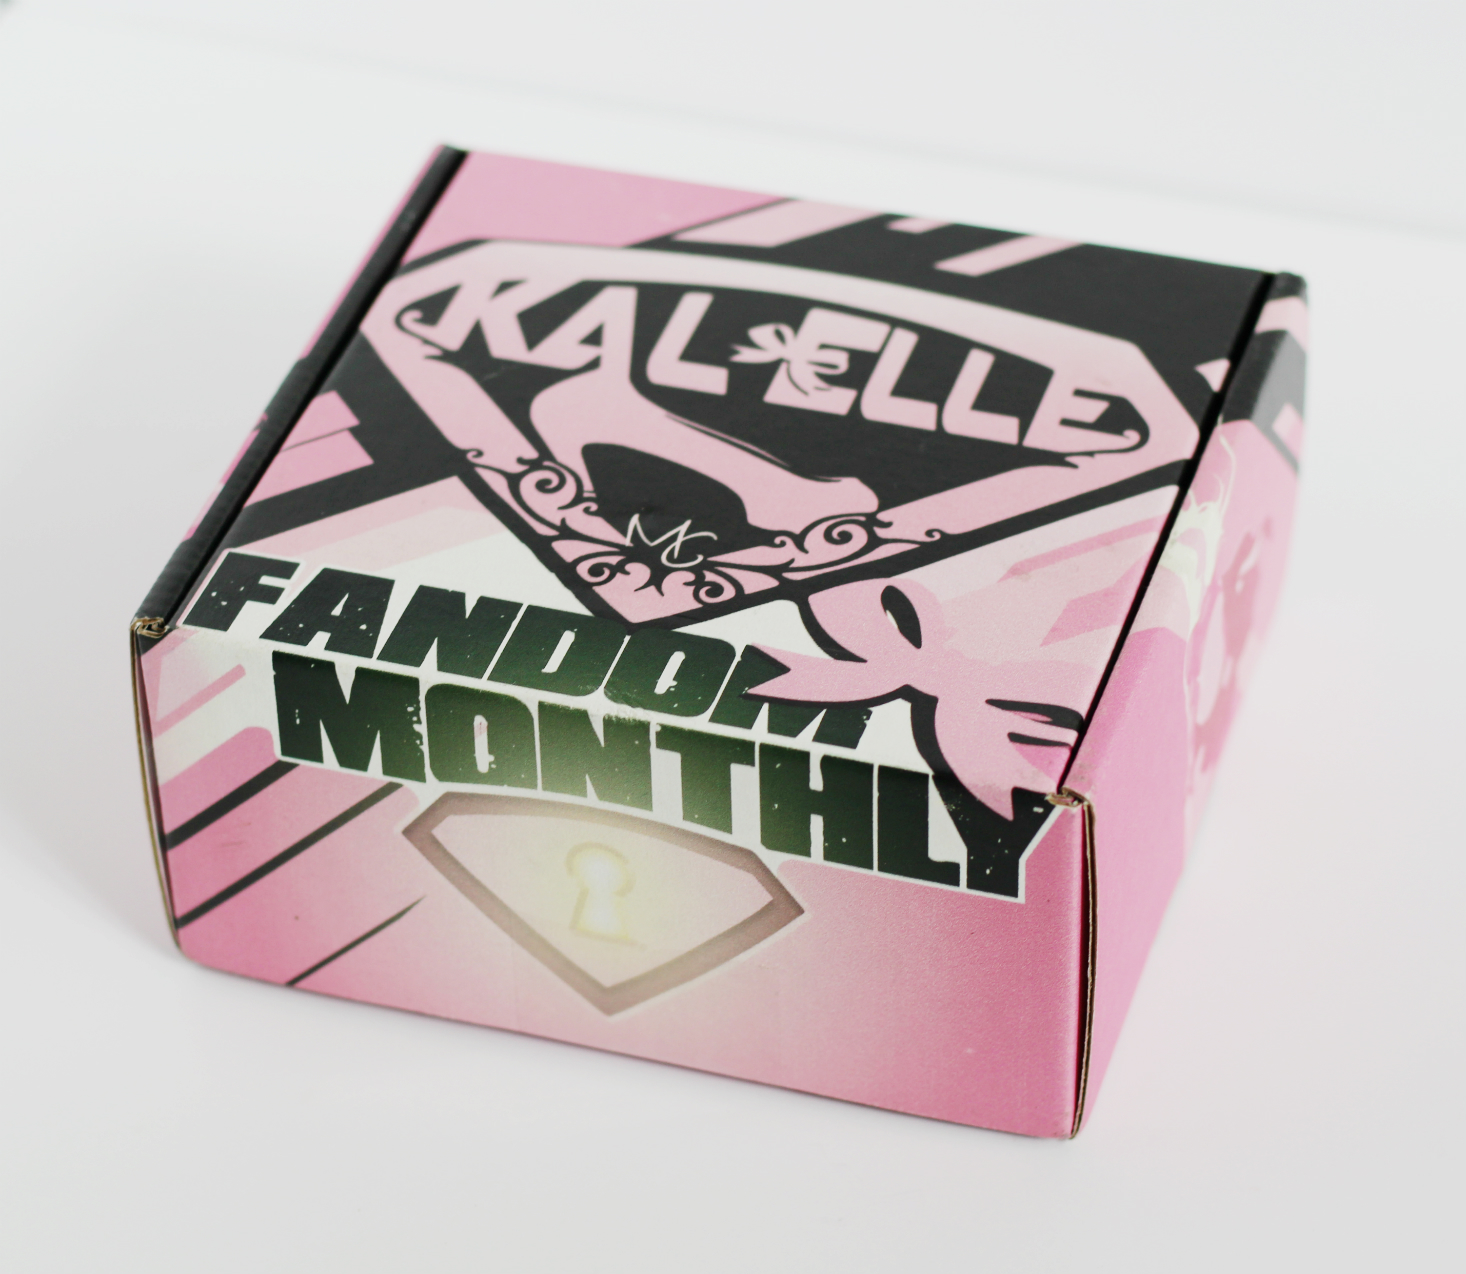 Kal-Elle Fandom Monthly Box Review + Coupon – August 2017